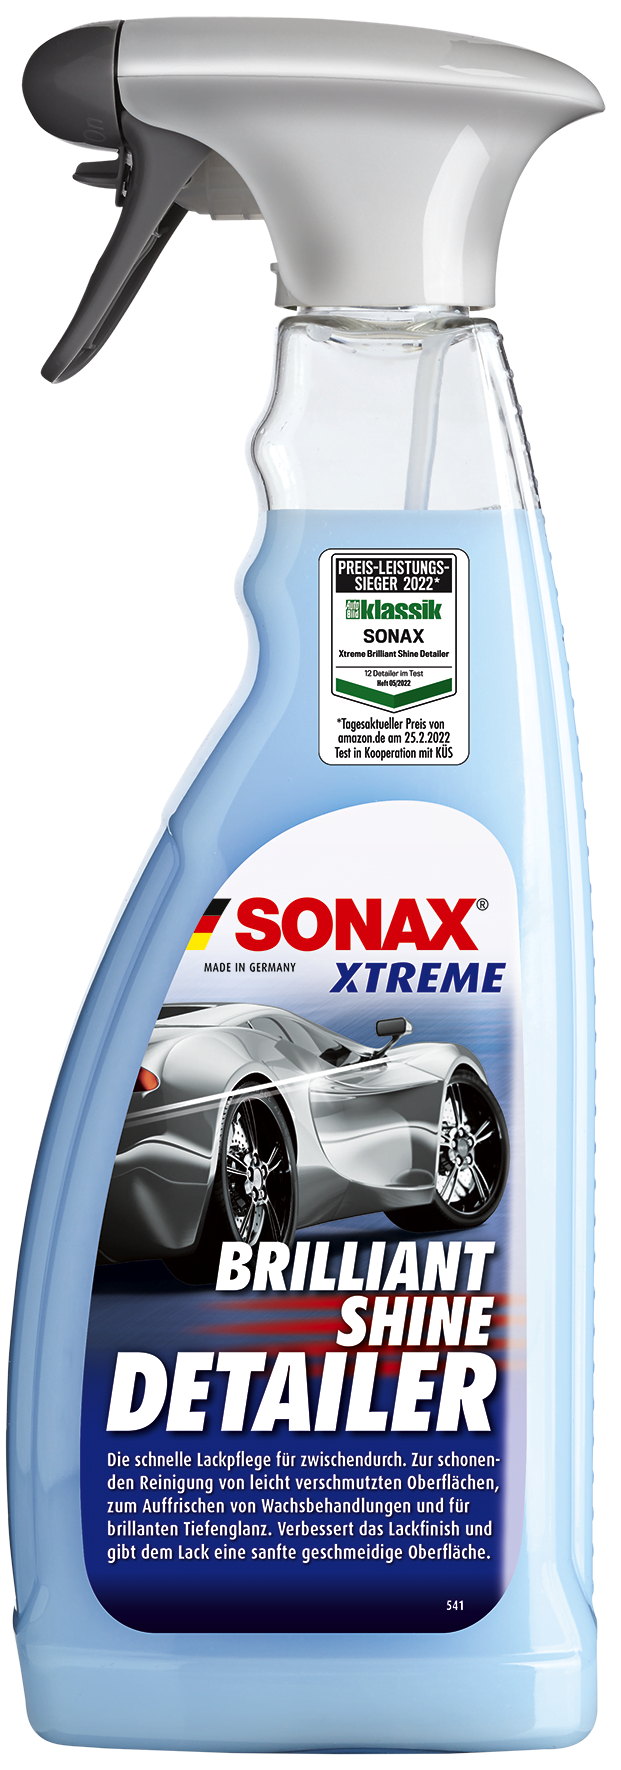 SONAX Xtreme Brilliant Shine Detailer 02874000